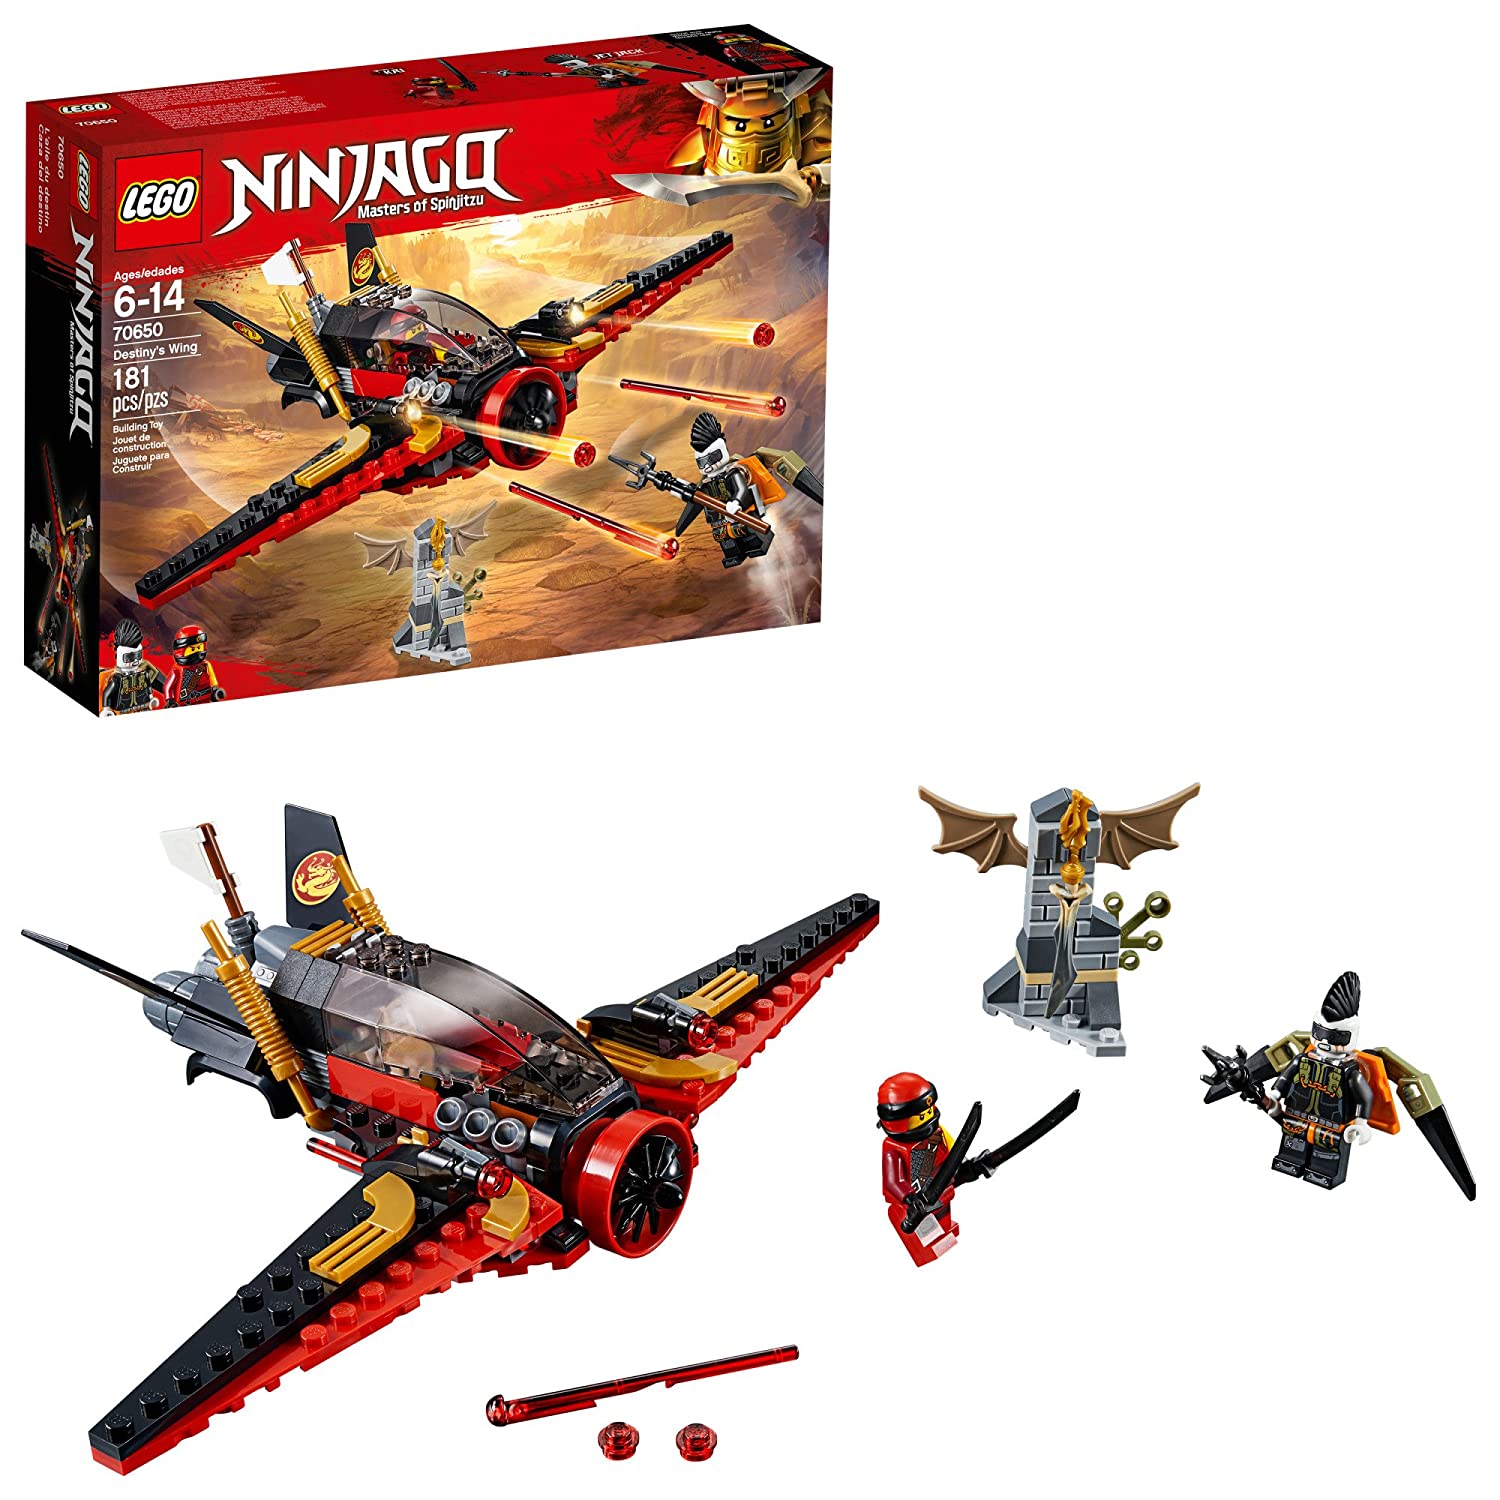 LEGO NINJAGO Masters of Spinjitzu: Destiny’s Wing 70650 Building Kit (181 Piece)